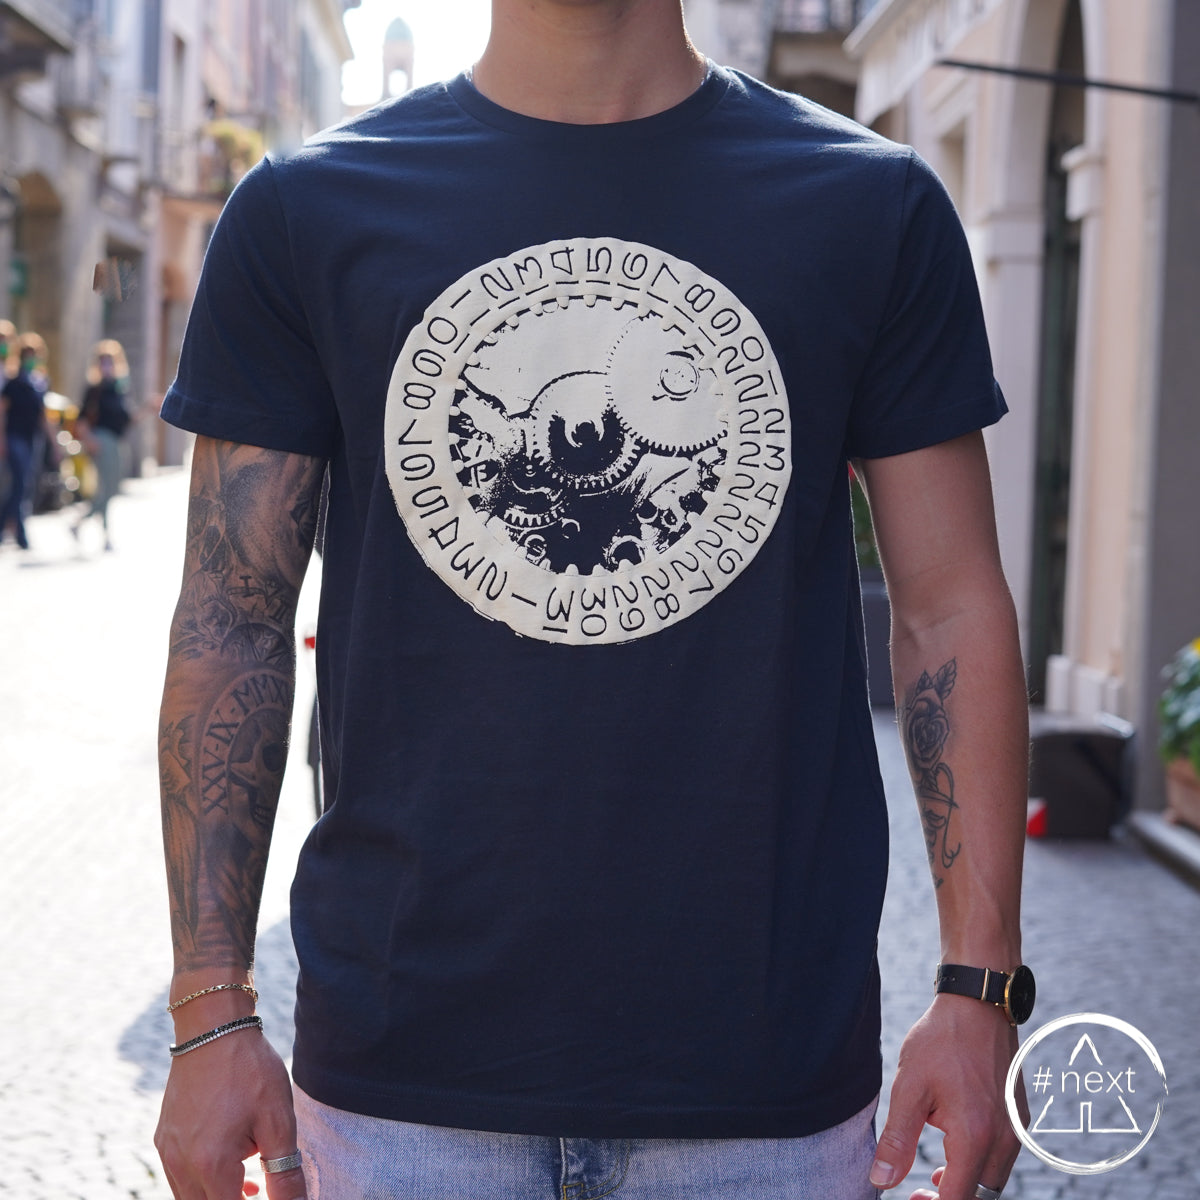 INCASODIVINTAGE - T-shirt - Sottomarino, blu navy. - ANDY #NEXT